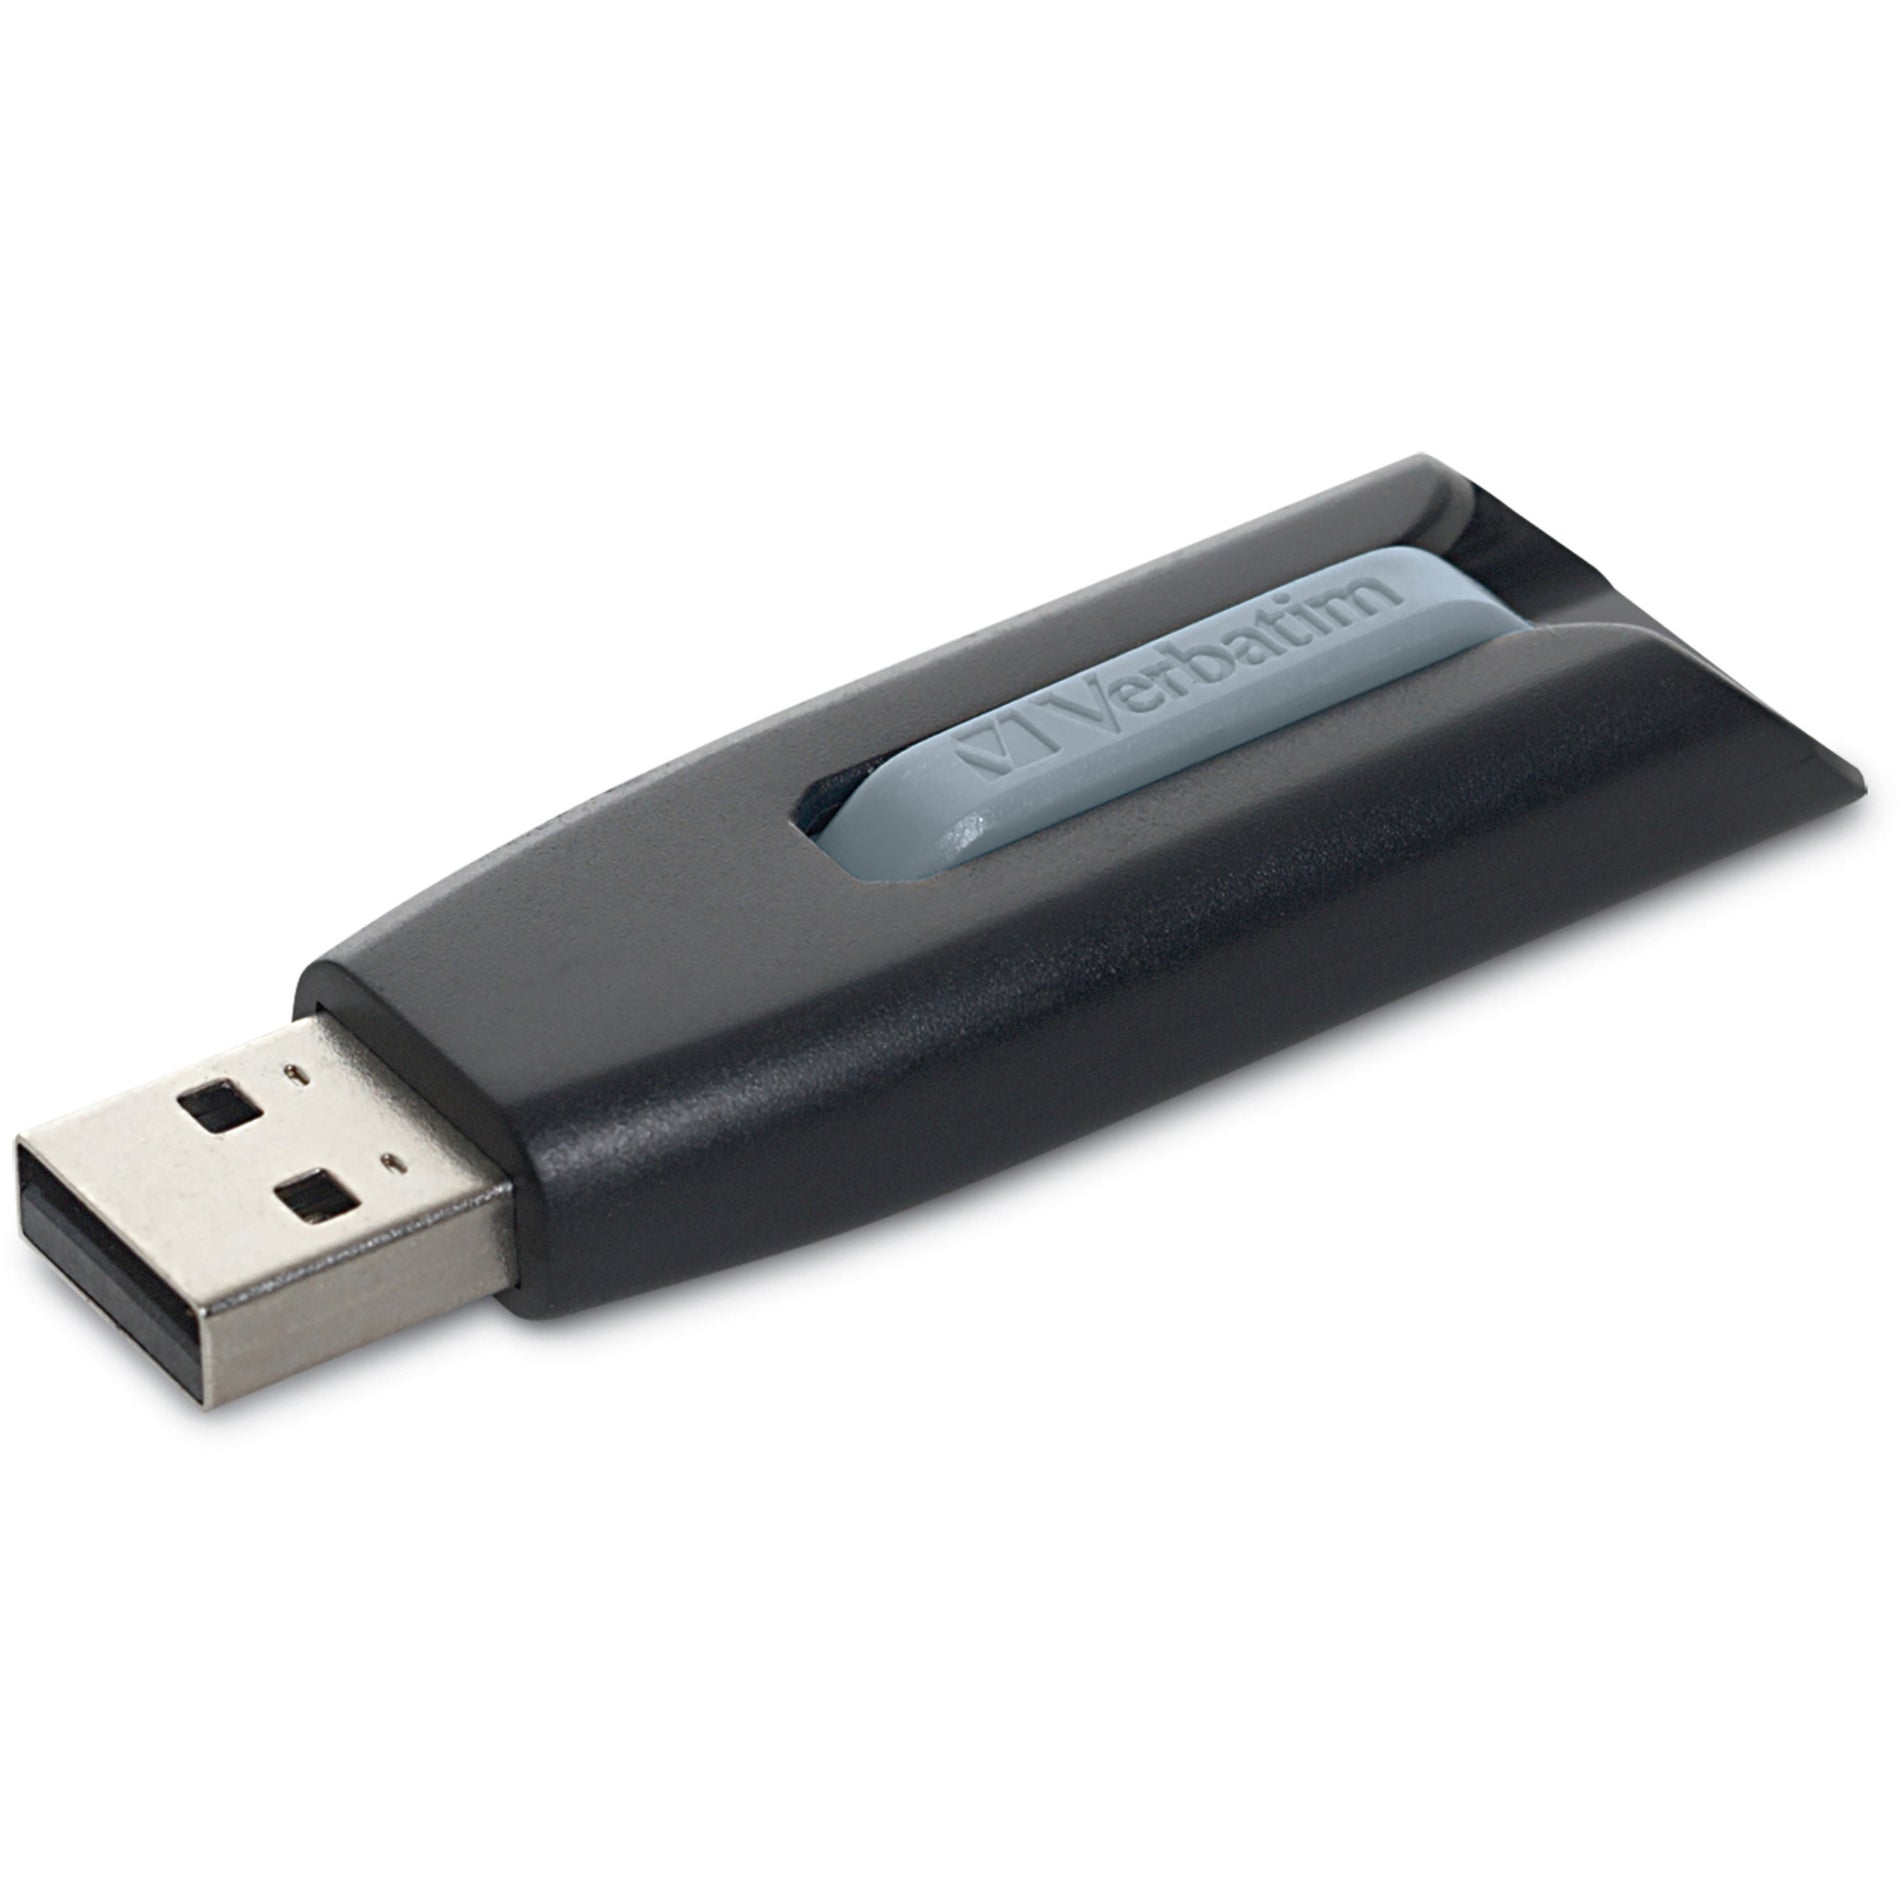 Microban 49189 Store 'n' Go V3 USB Drive 125GB Gray  Microban 49189 Memorizzare 'n' Go V3 Unità USB 125GB Grigio